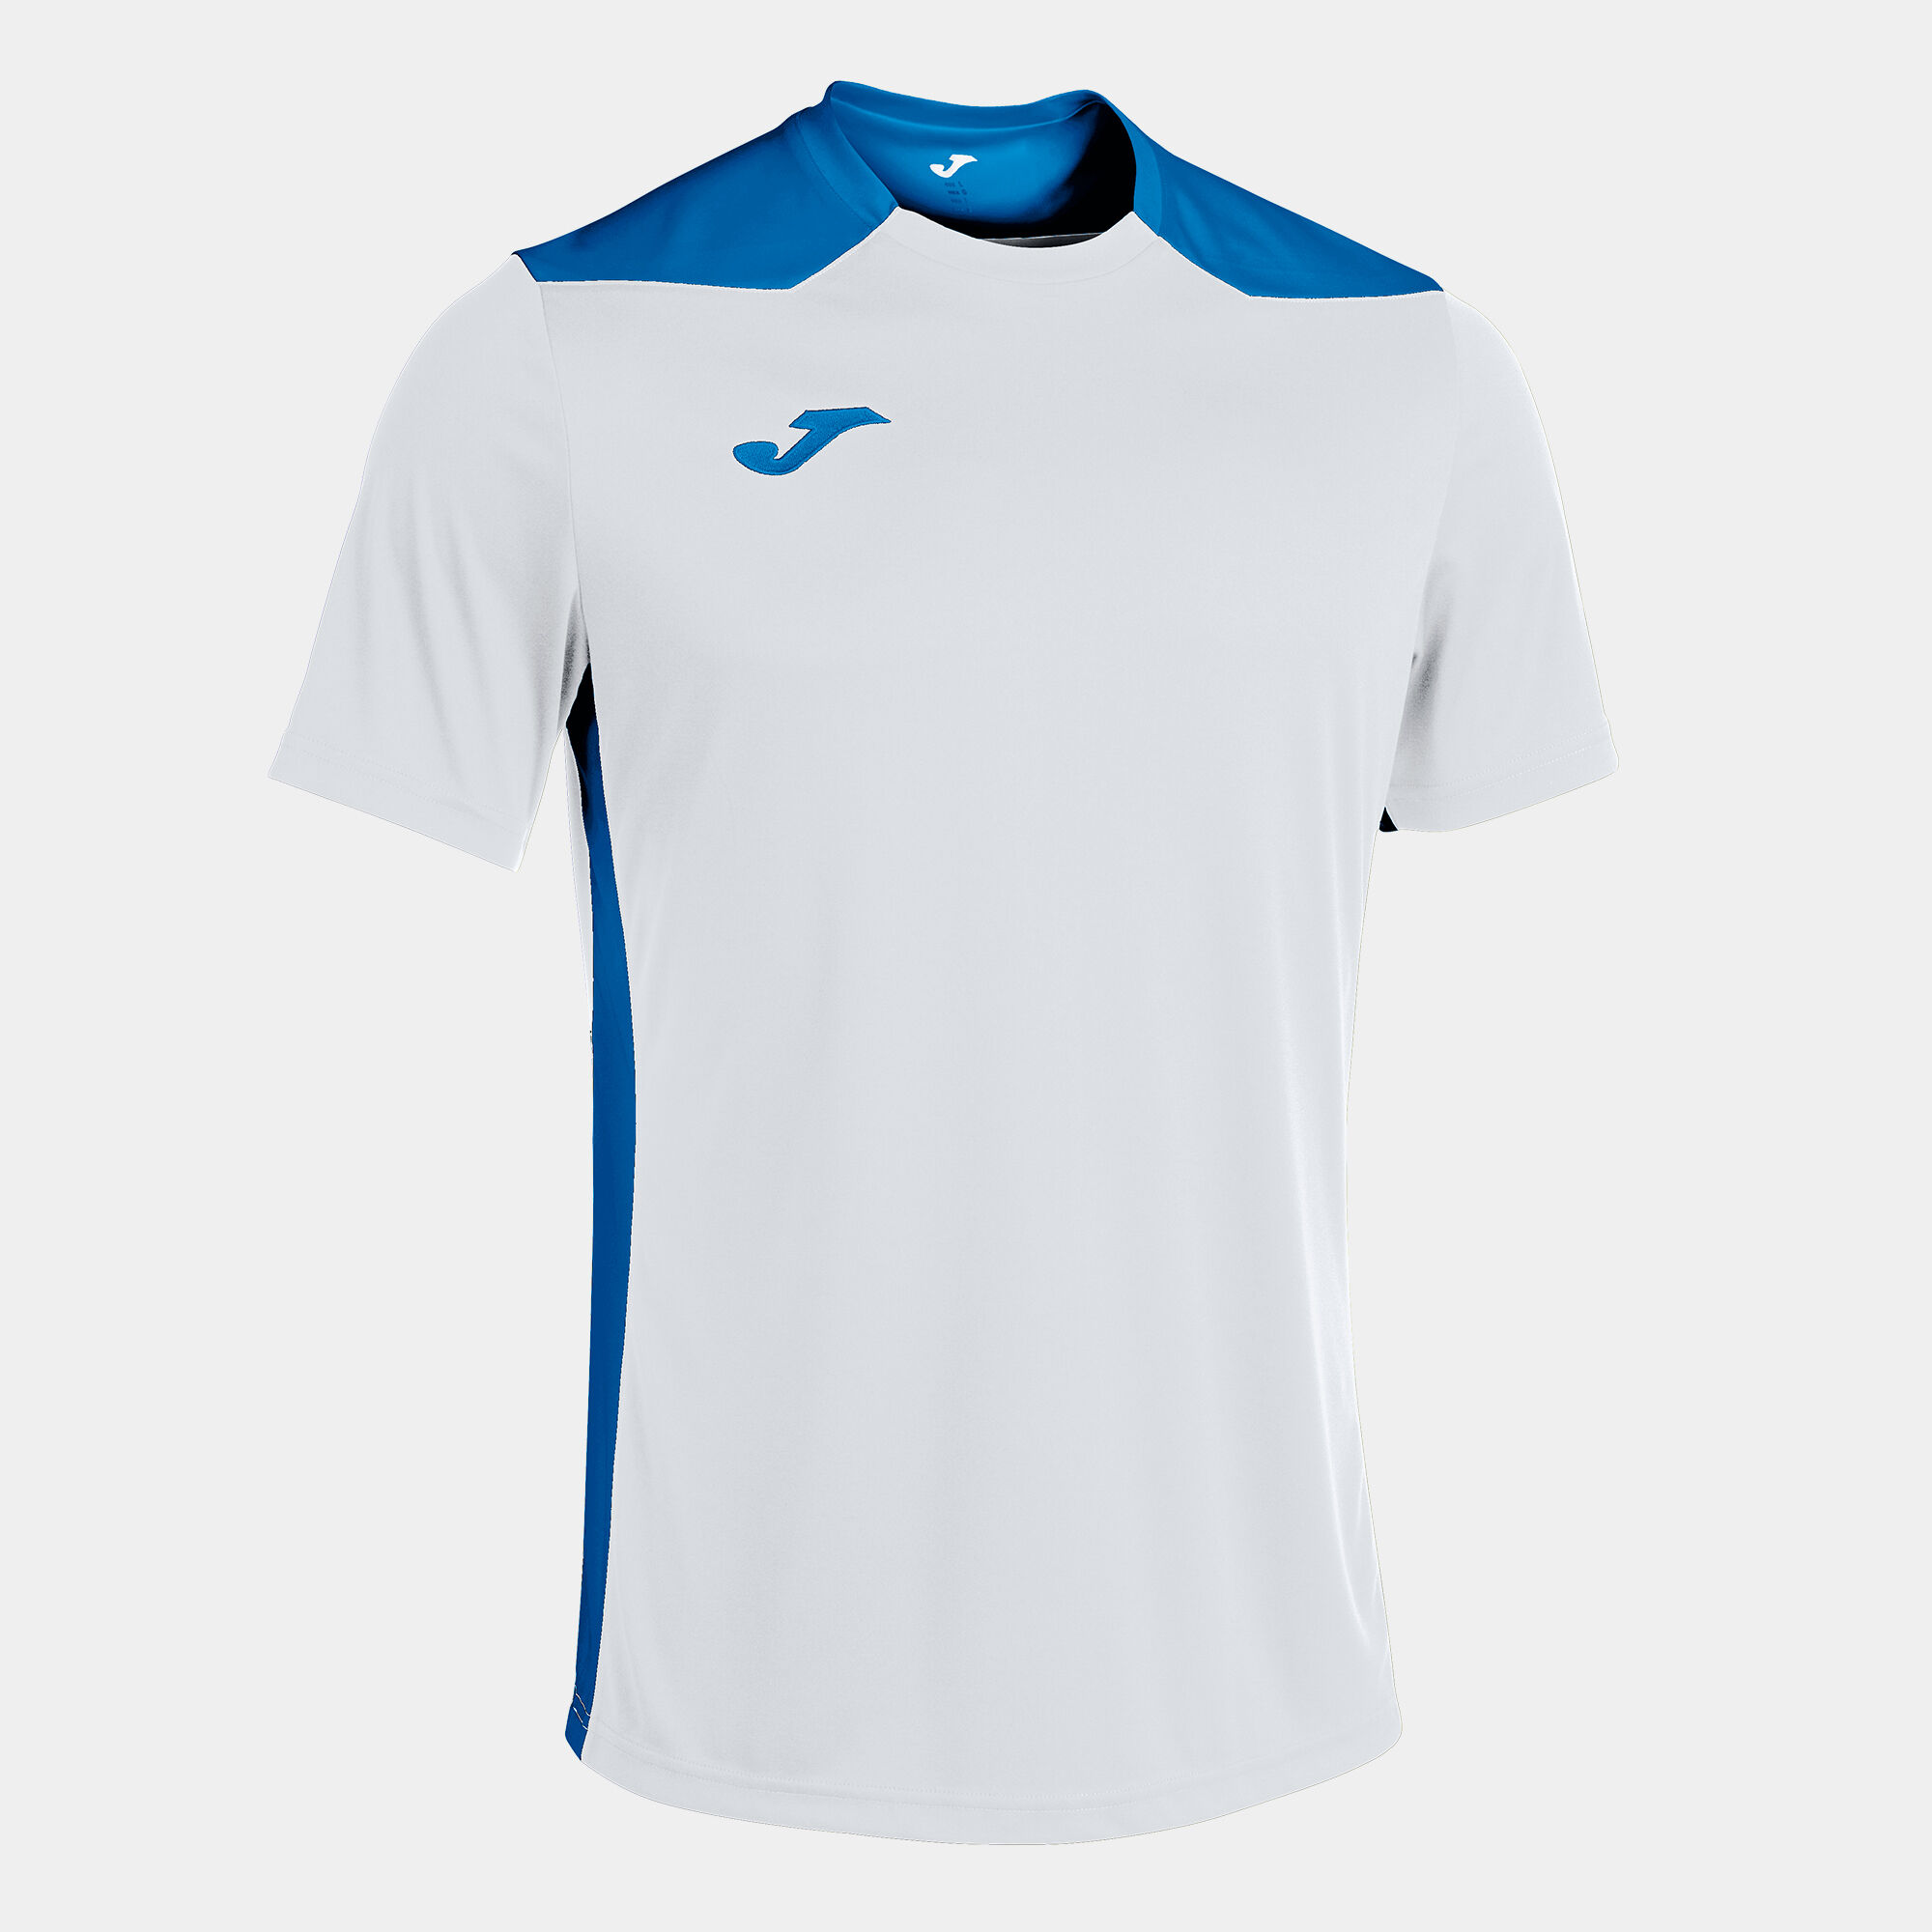 Shirt short sleeve man Championship VI white royal blue